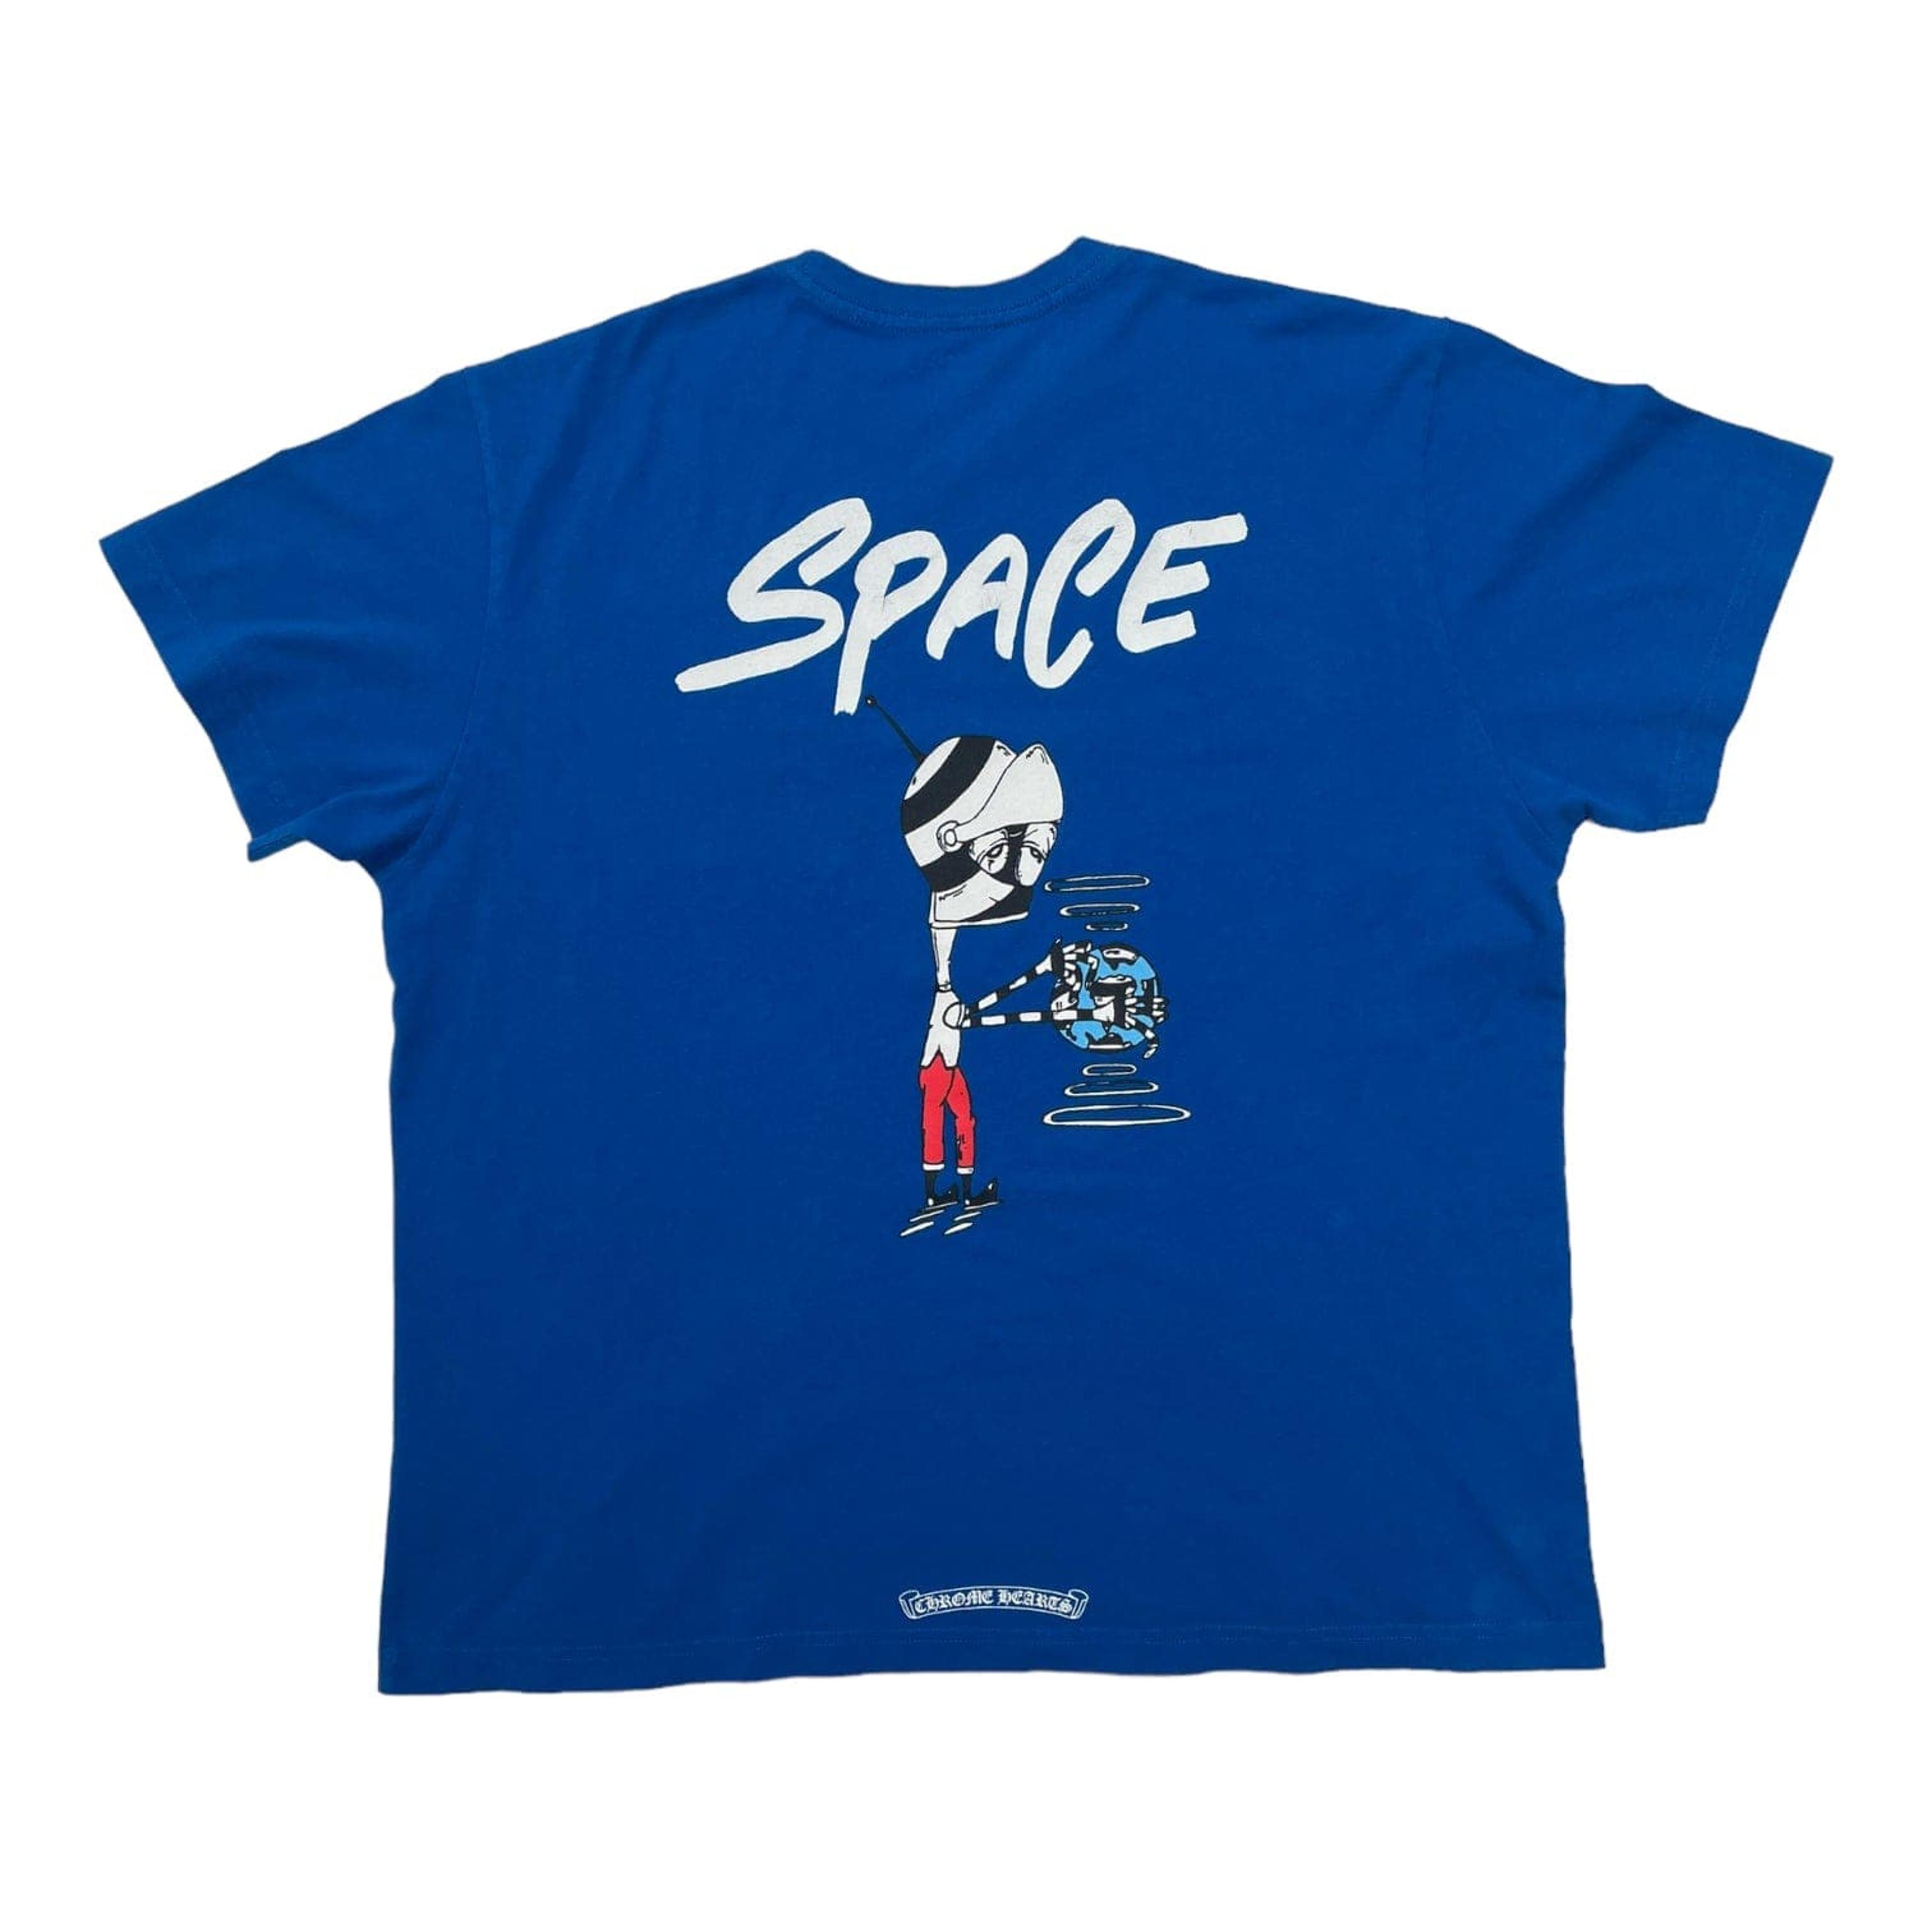 Chrome Hearts Matty Boy Space Short Sleeve Tee Shirt Blue Pre-Ow